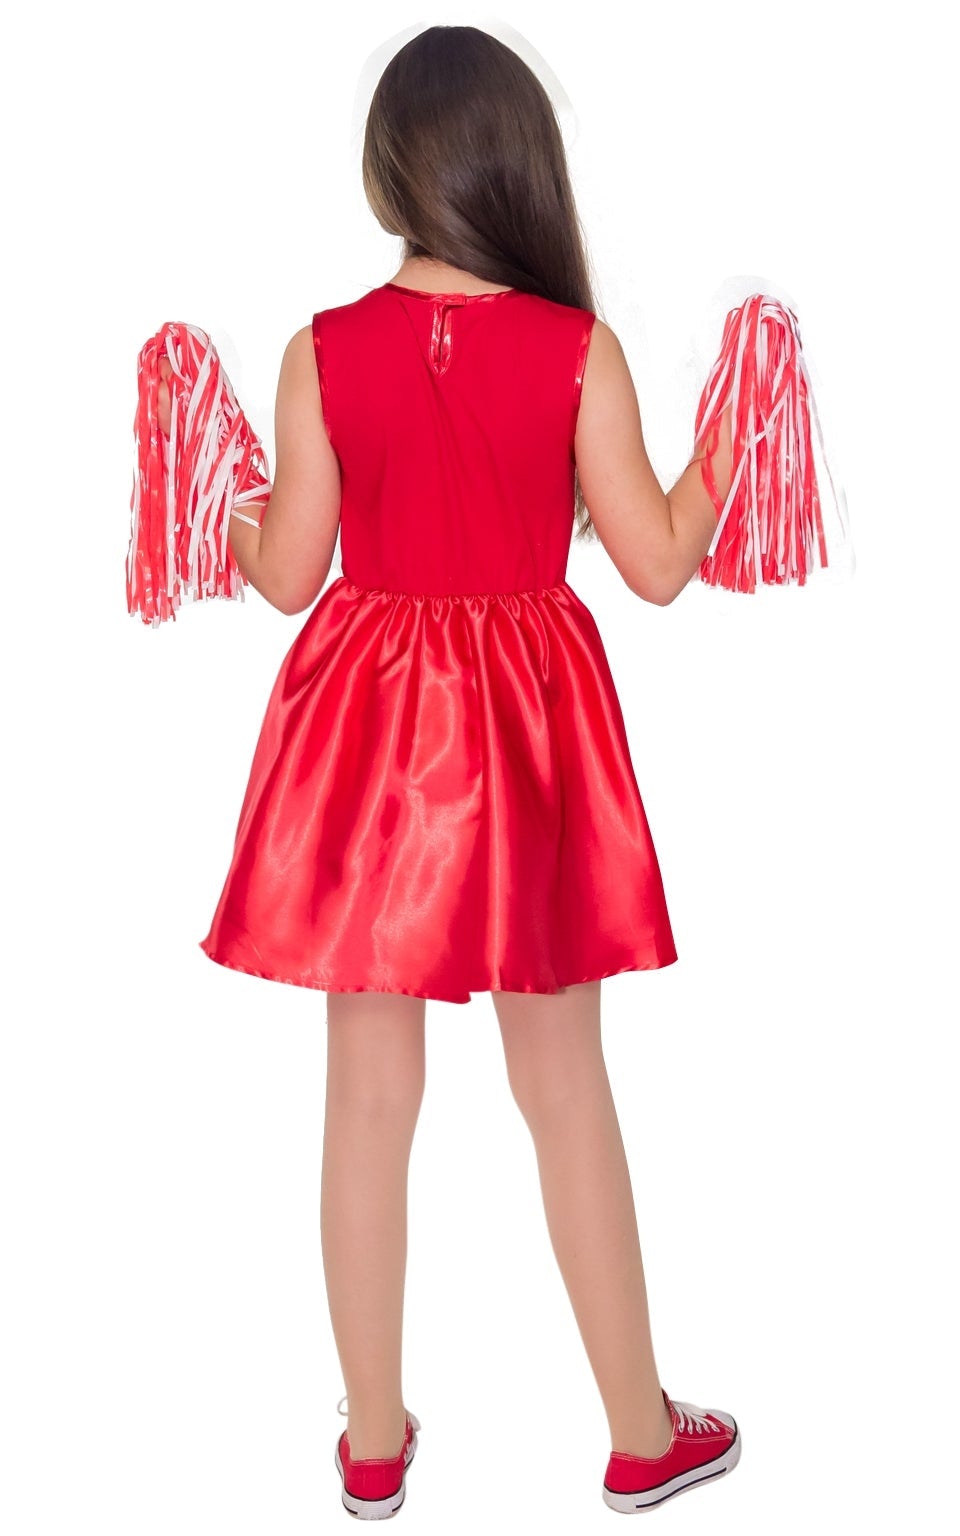 WilDCat Cheerleader Dress and Pom Poms_2